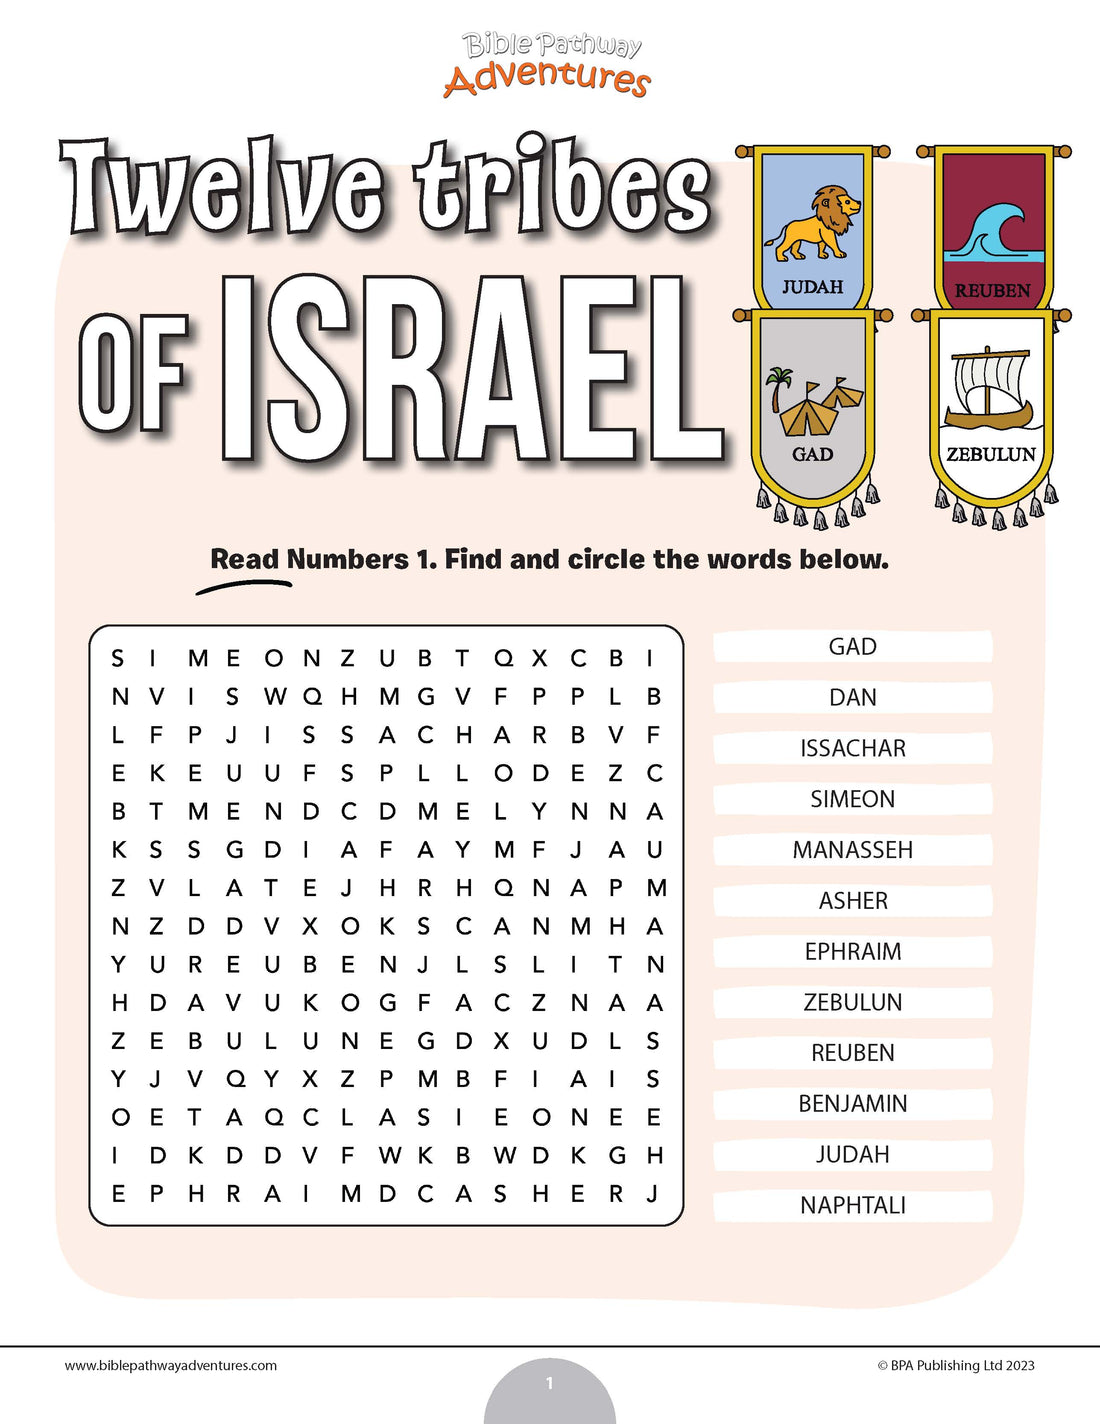 Twelve Tribes of Israel word search (PDF) Bible Pathway Adventures